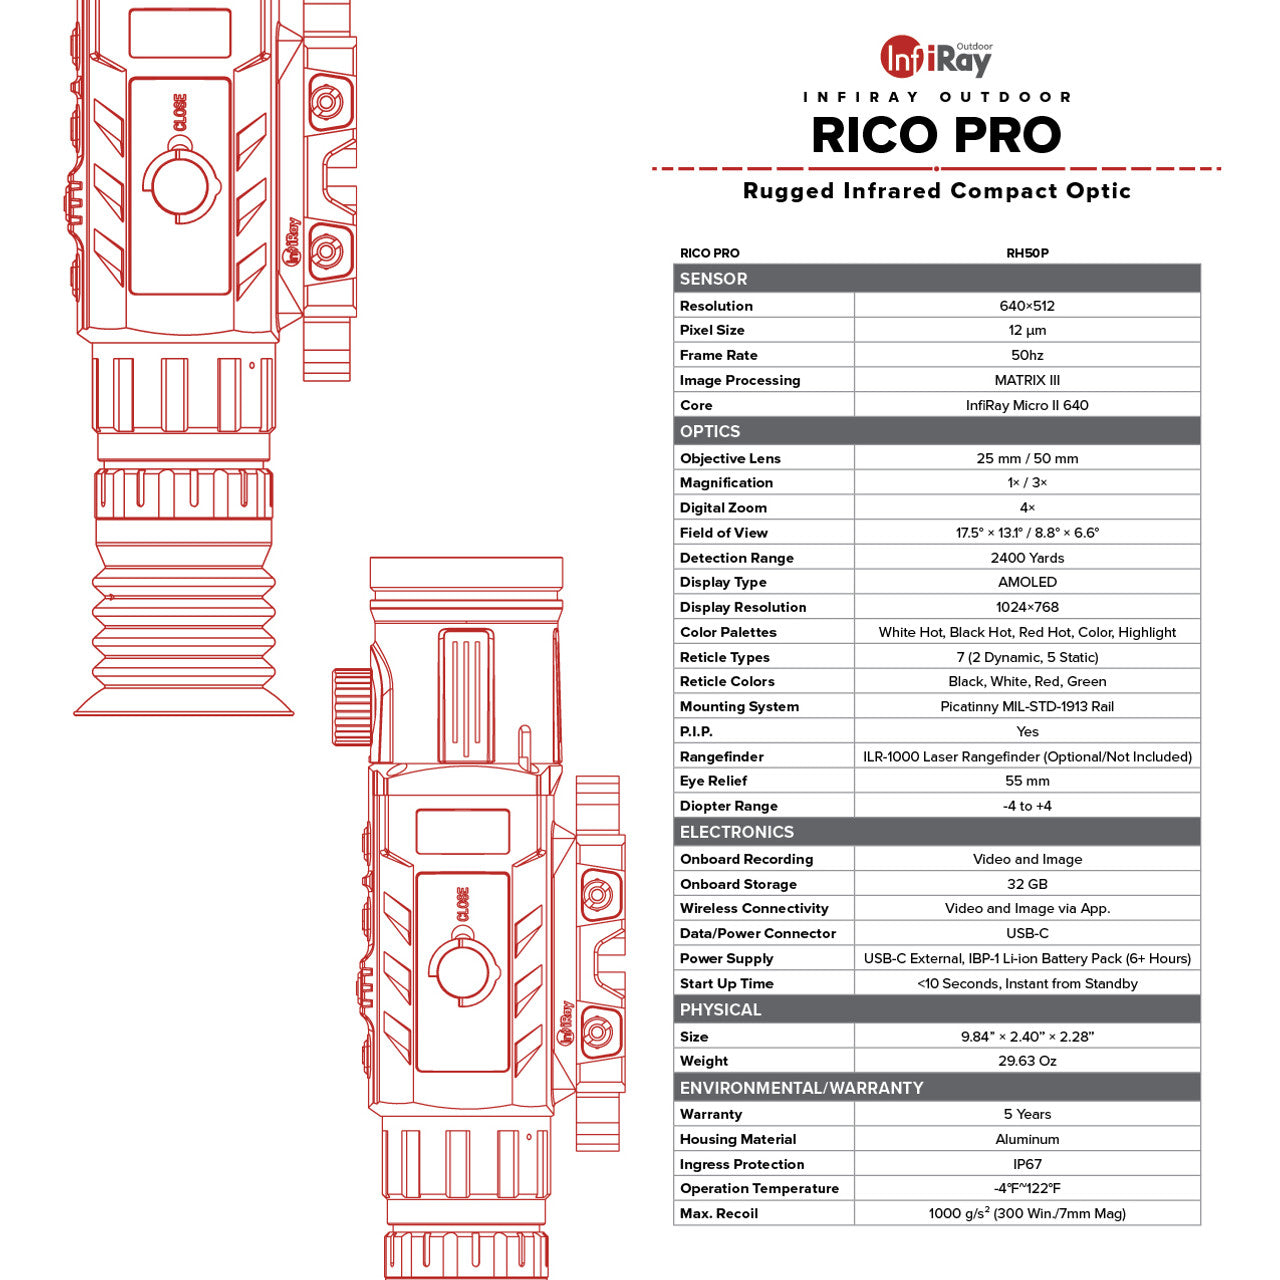 InfiRay Outdoor Rico Pro RH50P 1.5x-3x Thermal Rifle Scope